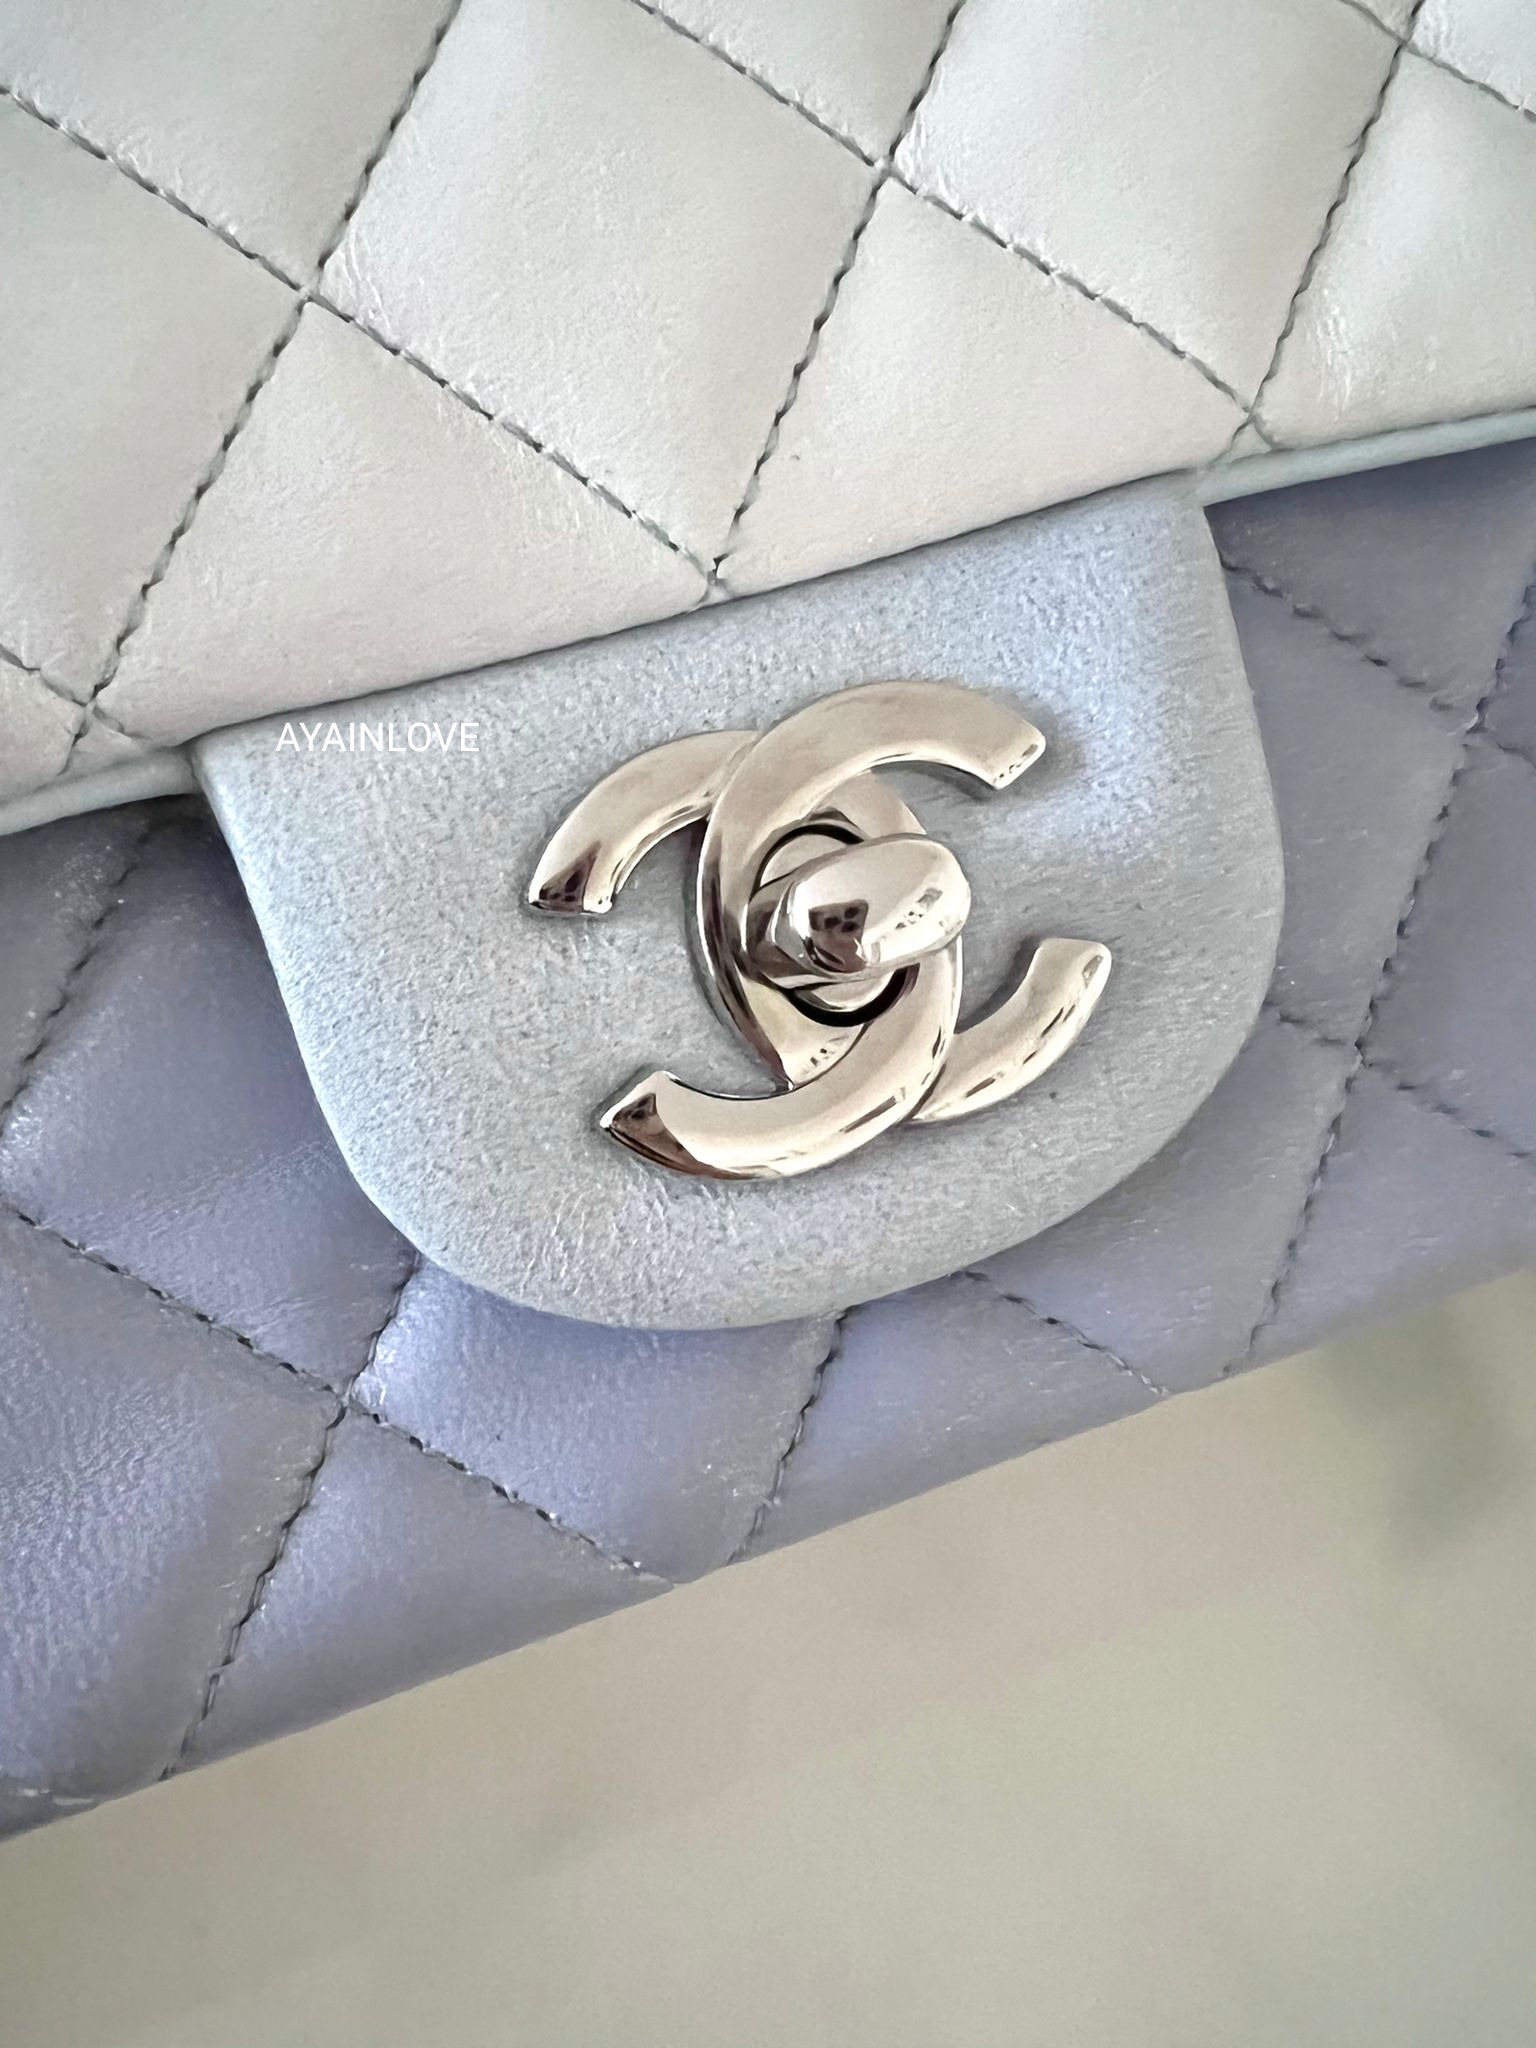 Chanel Mini rectangular purple lambskin with silver hardware 20C new.